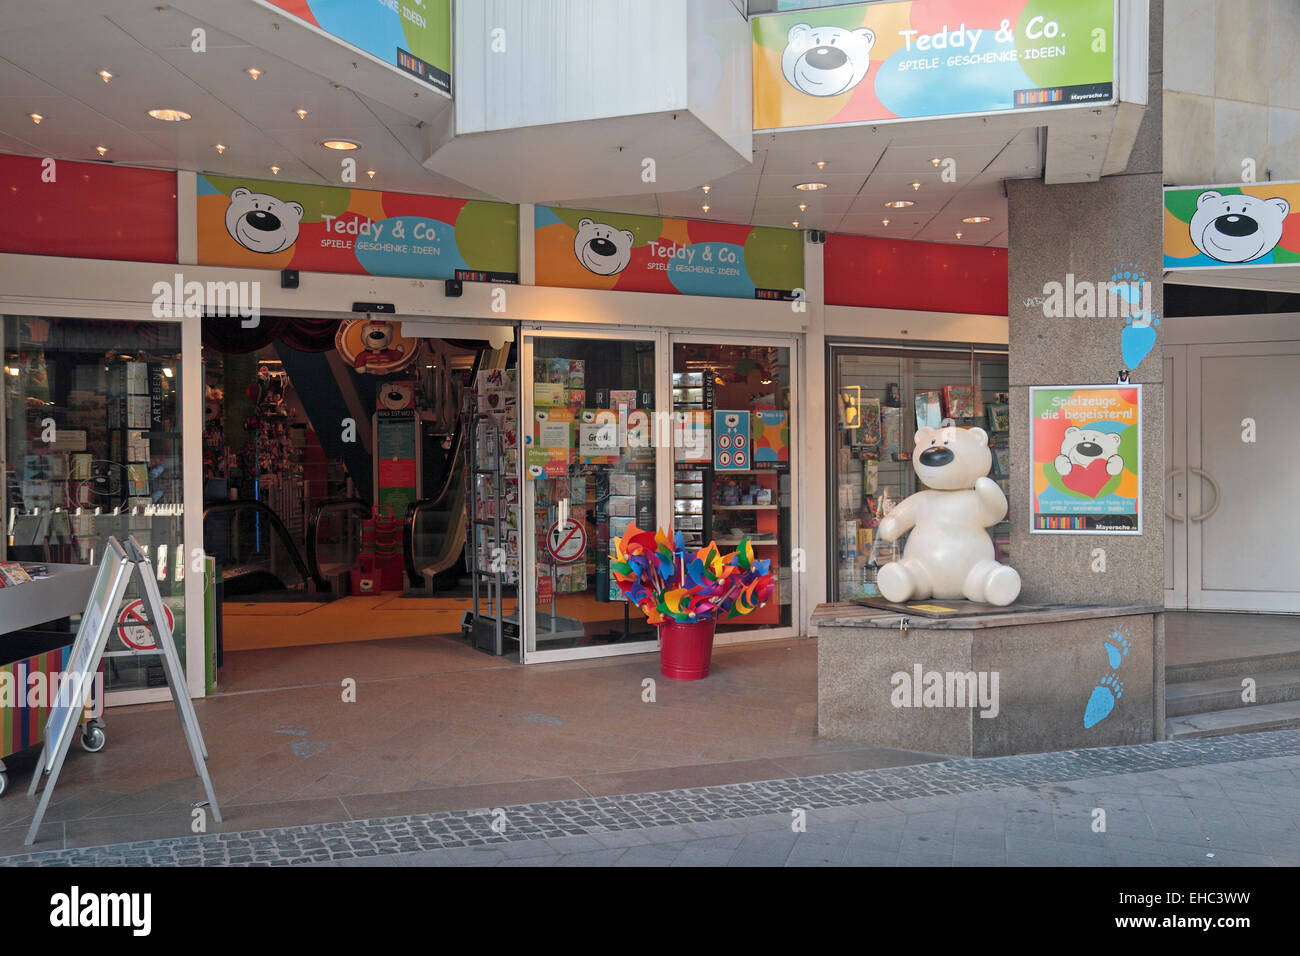 Teddy & Co magasin de jouets, Buchkremerstraße, Aix-la-Chapelle, Allemagne  Photo Stock - Alamy